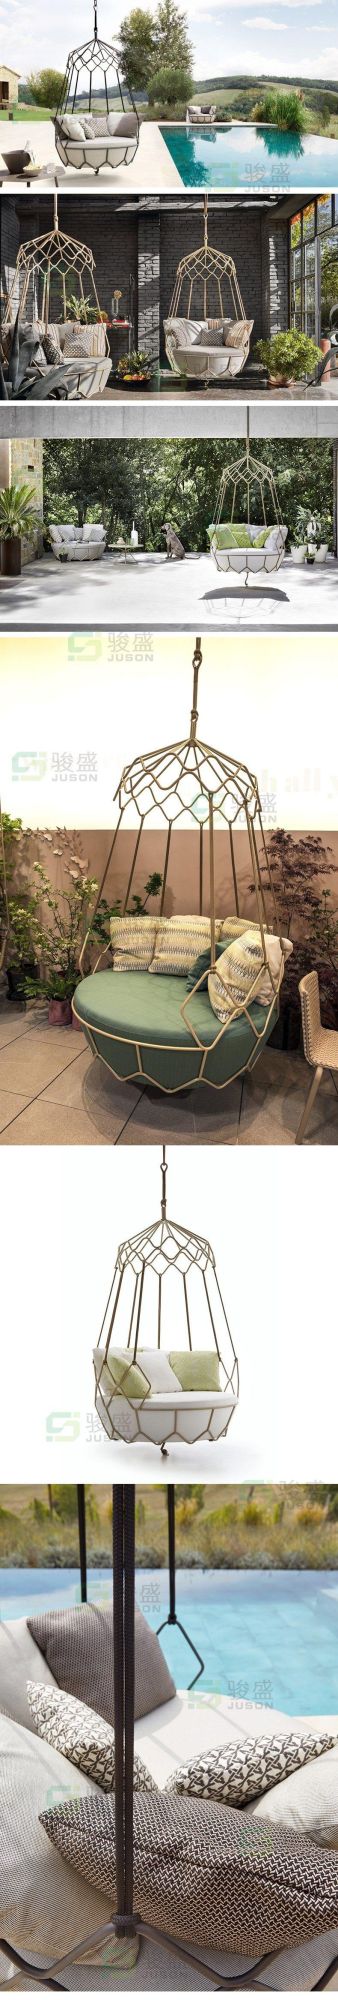 Hot Sale Hotel Furniture Modern Outdoor Hanging Chair Patio Leisure Chair Garden Swing